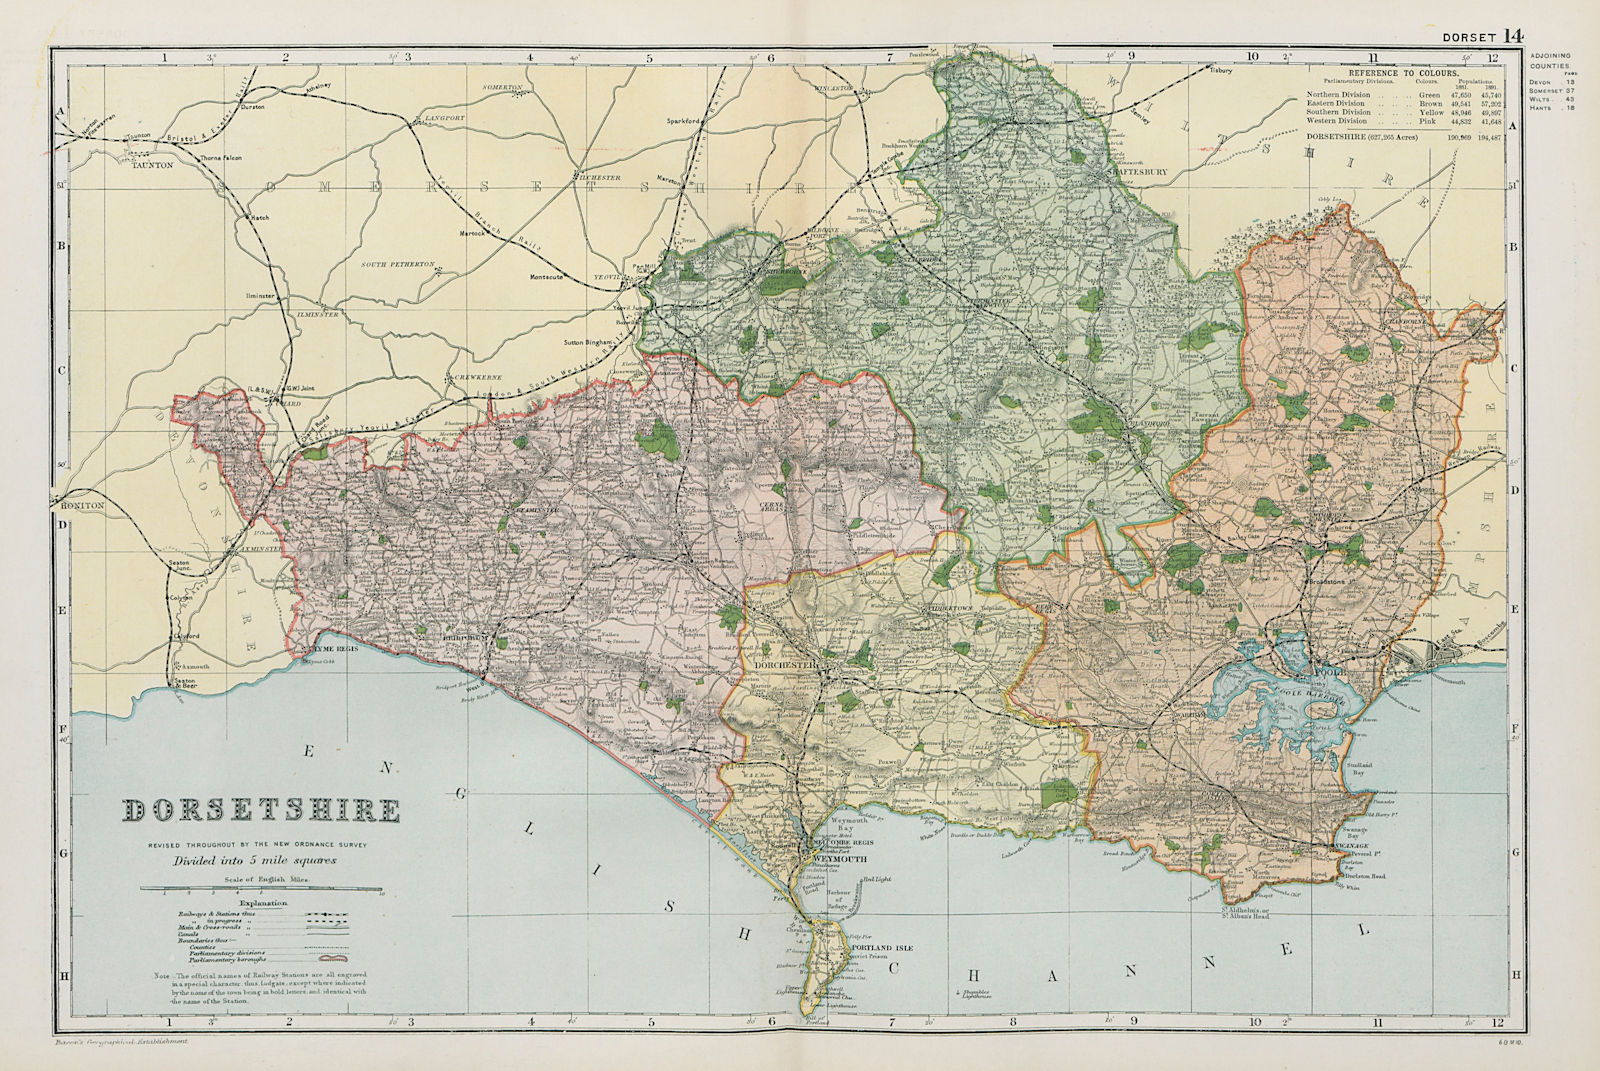 DORSETSHIRE. Parliamentary divisions, boroughs & parks. Dorset. BACON 1900 map